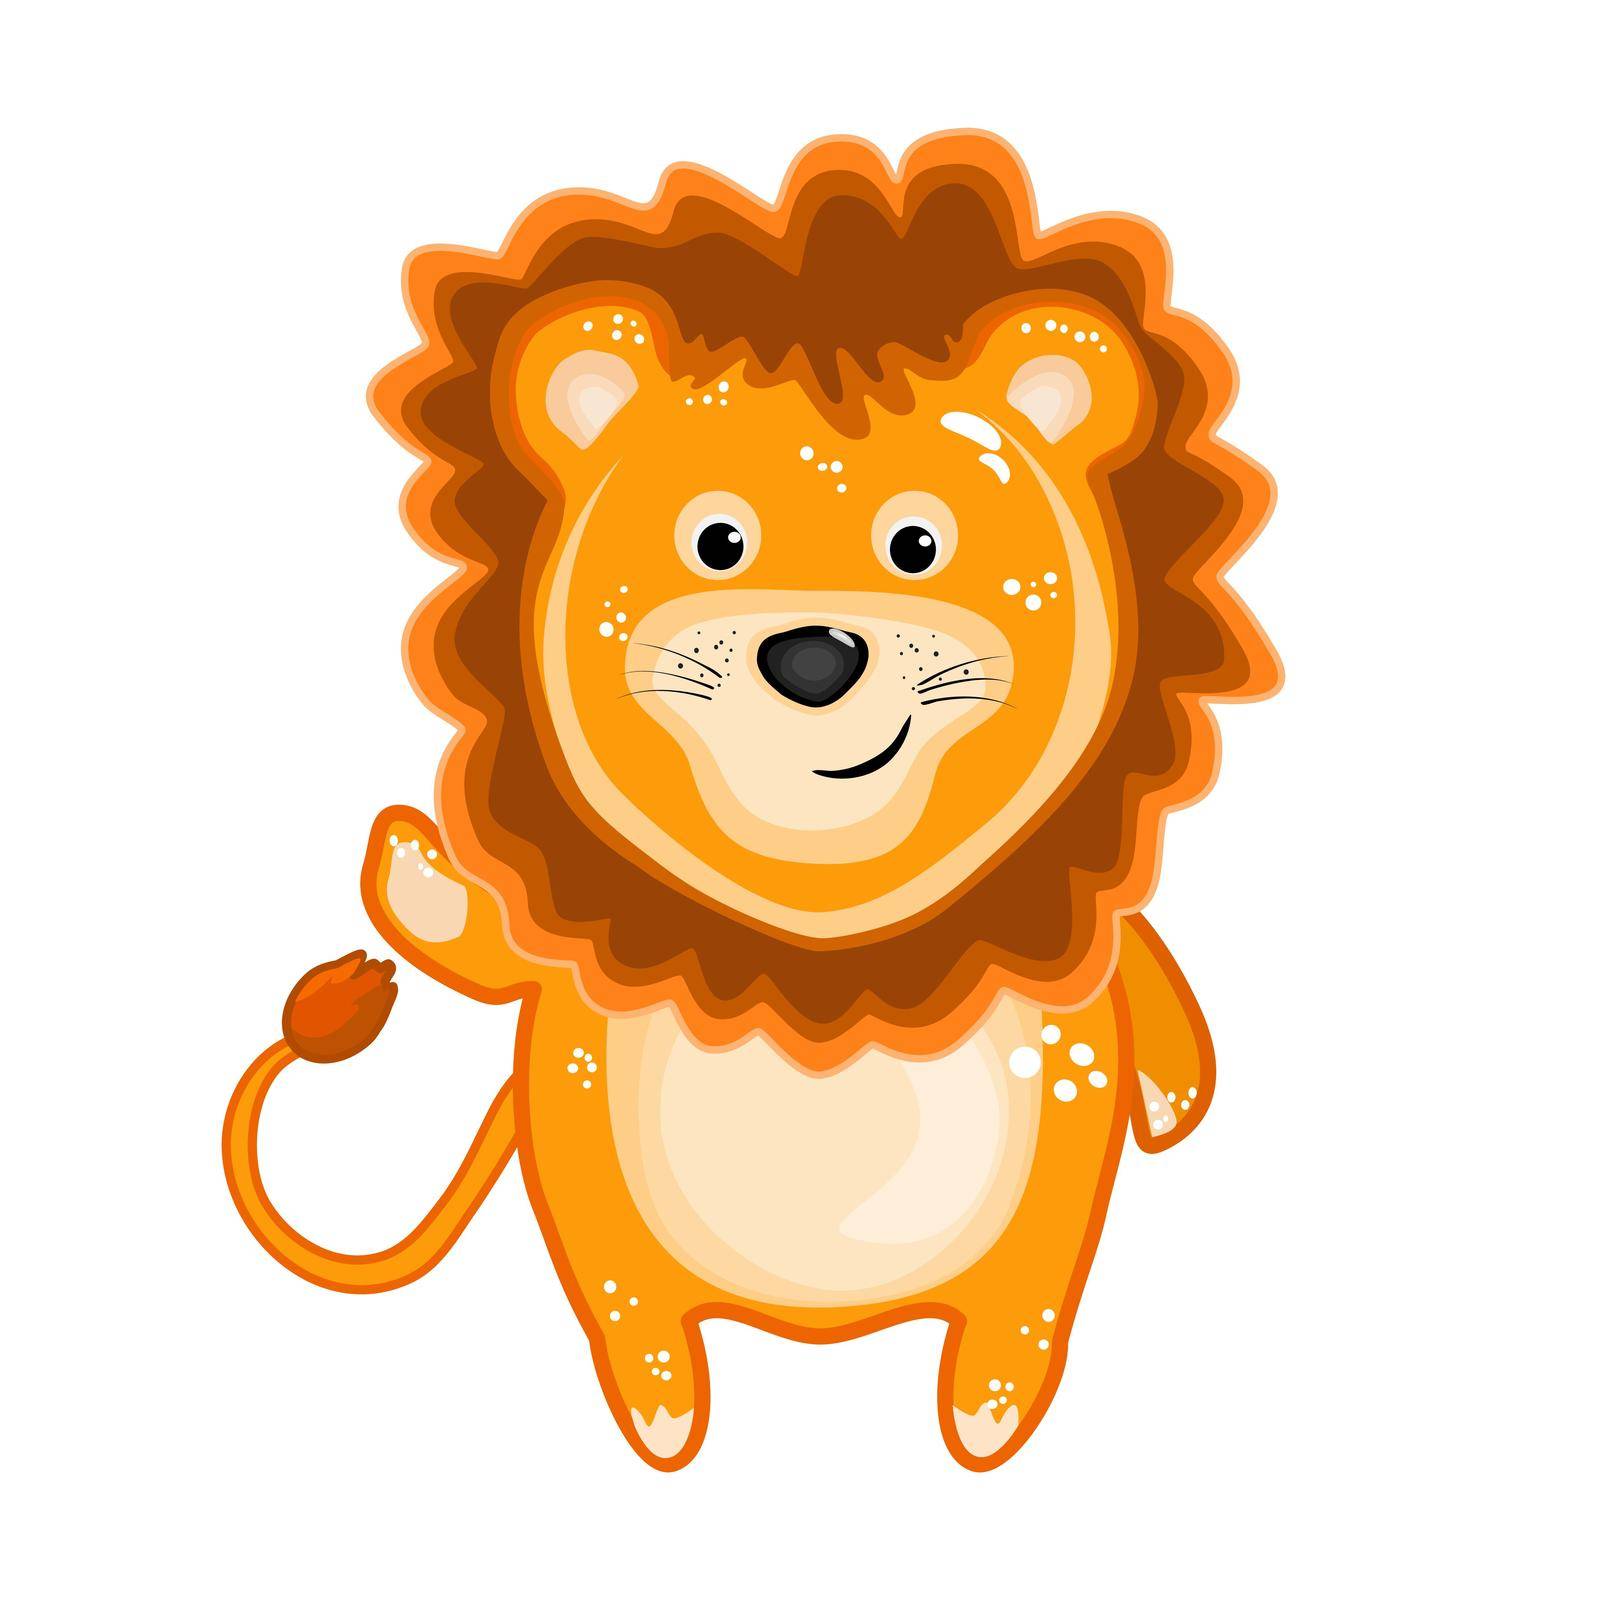 Safari cartoon lovely leo. Cute little jungle kitty or wildcat mascot. Africa wildlife animal symbol. Stock vector illustration